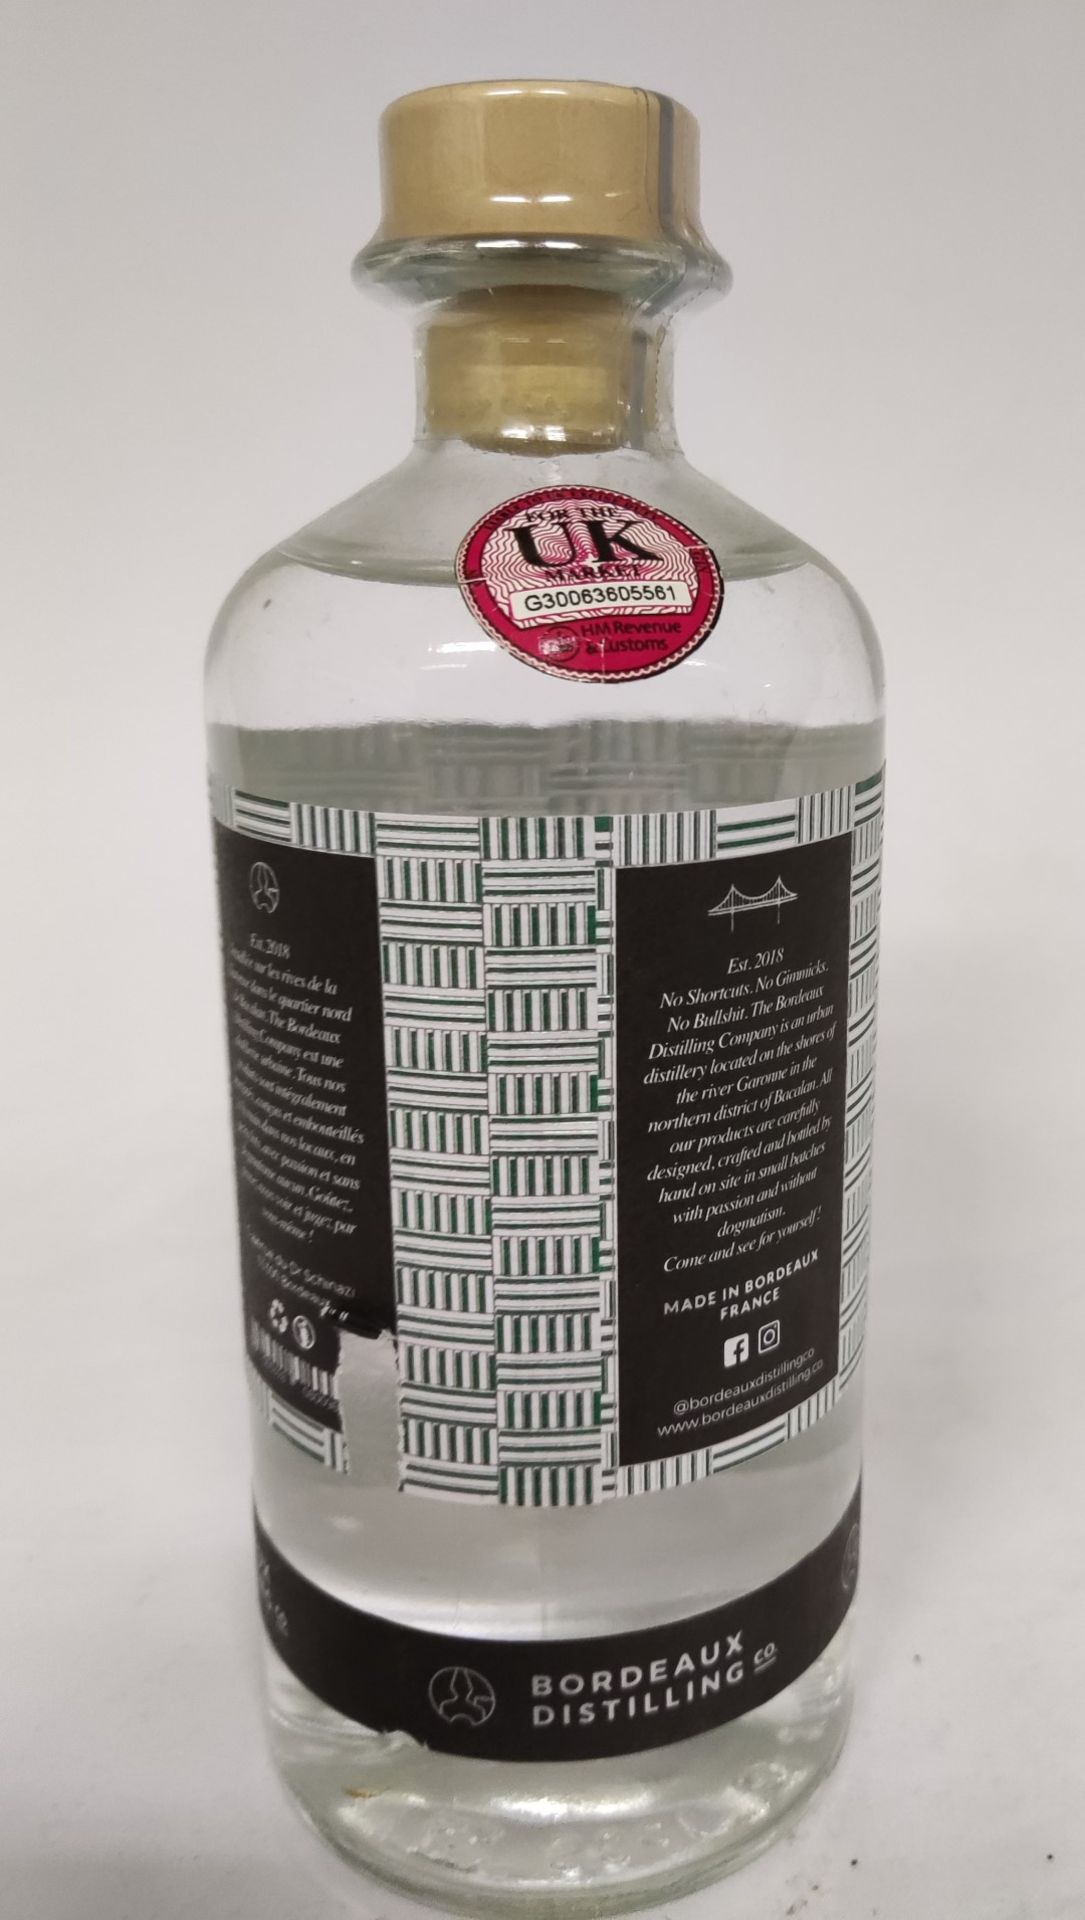 1 x Bottle of Bordeaux Distilling Co. Rivington Dry Gin 50cl - RRP £30 - Image 5 of 5